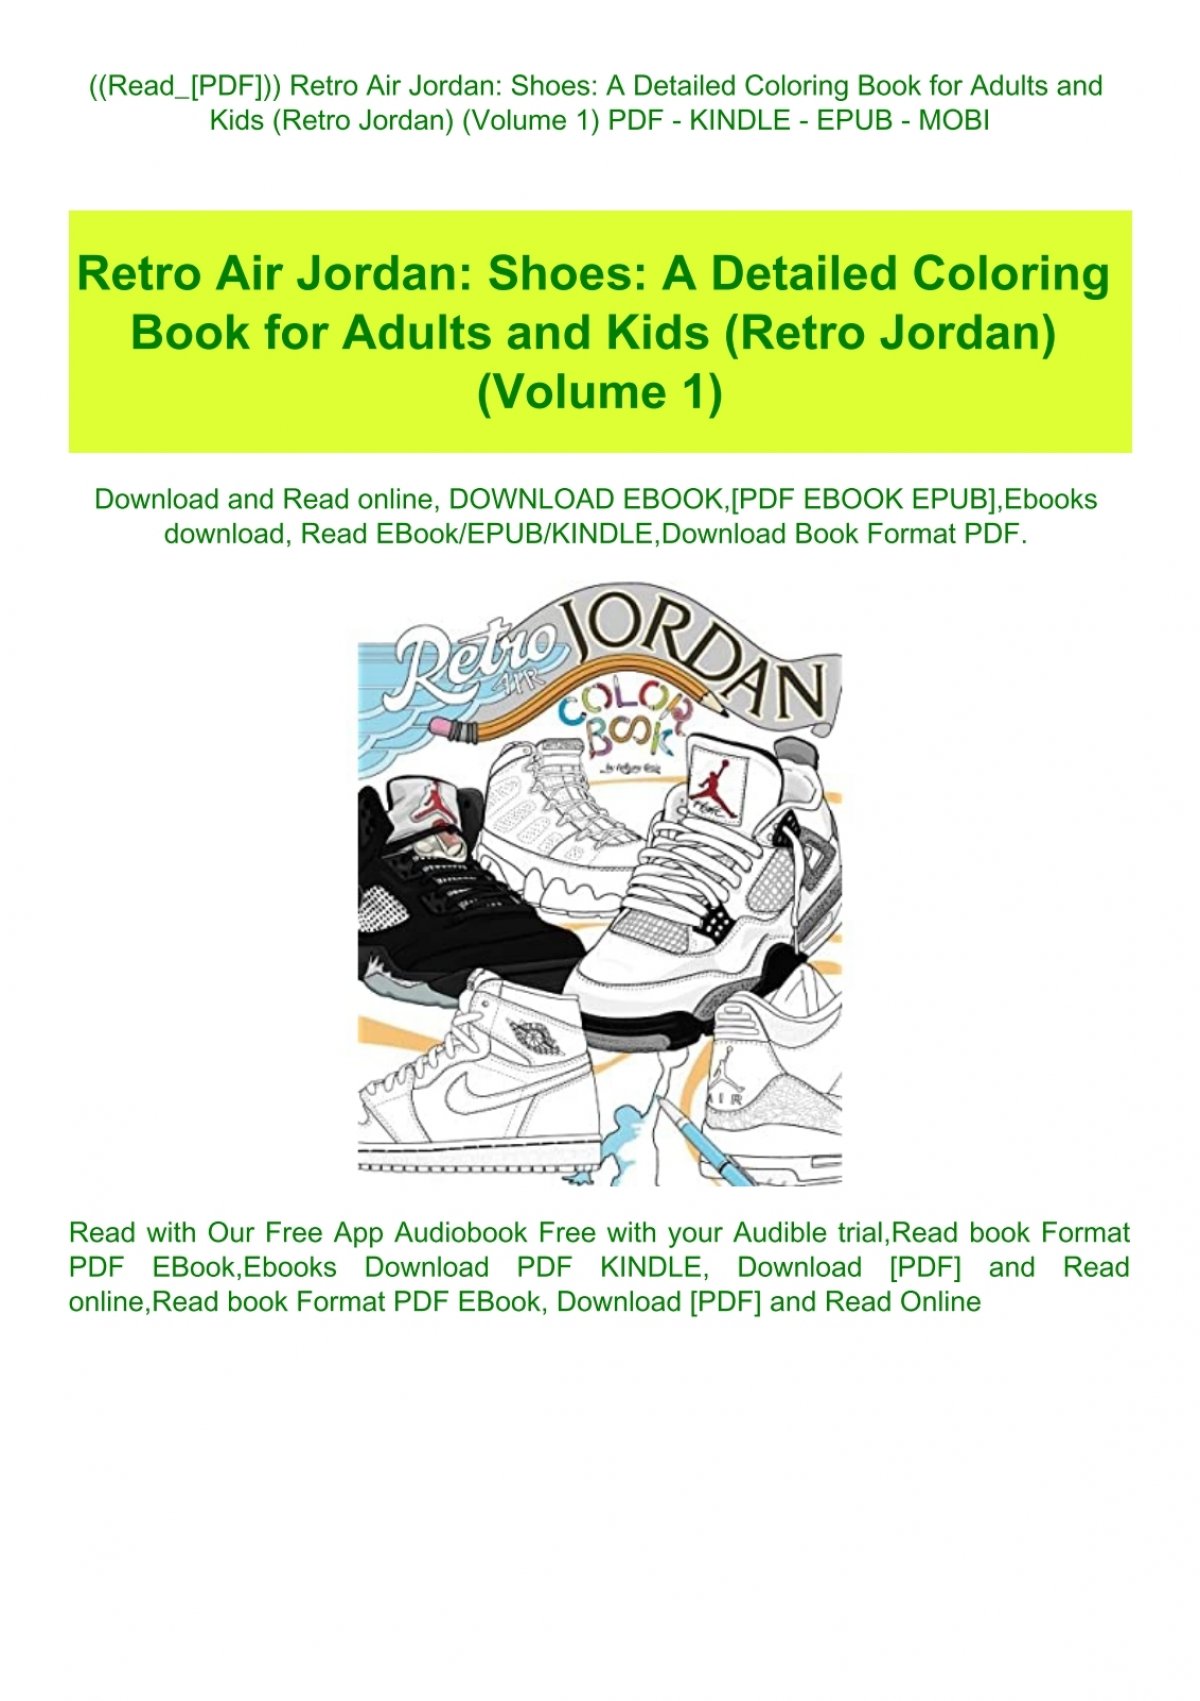 Download Read Pdf Retro Air Jordan Shoes A Detailed Coloring Book For Adults And Kids Retro Jordan Volume 1 Pdf Kindle Epub Mobi